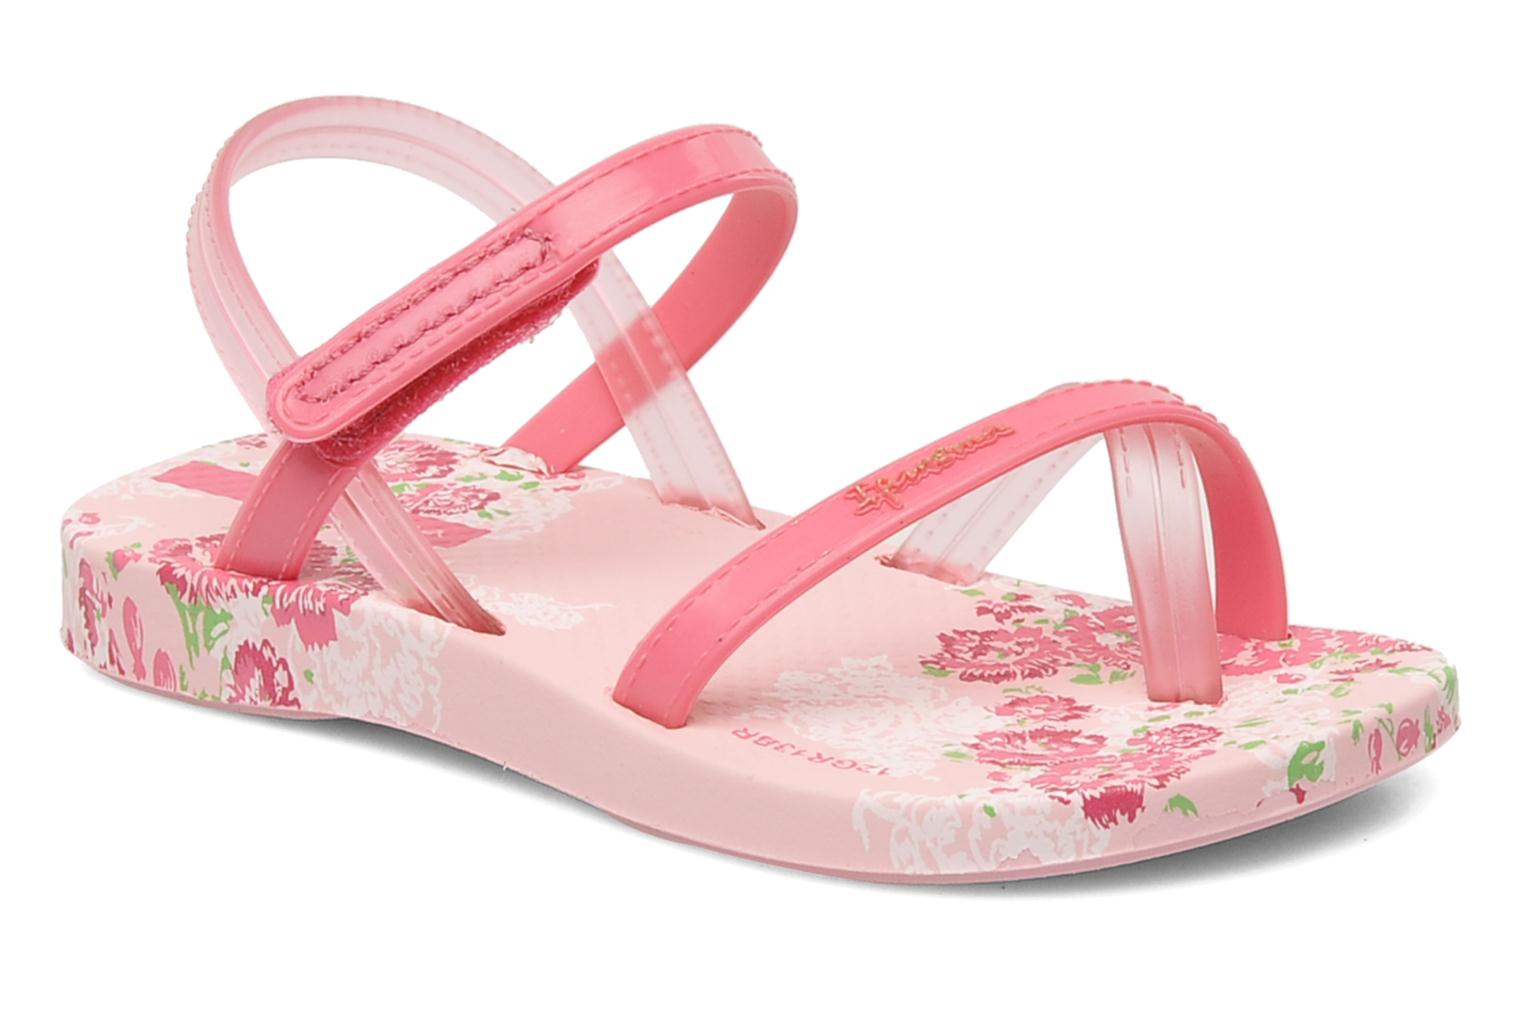 Ipanema Fashion Sandal Baby (Rose) - Sandales et nu-pieds chez Sarenza ...